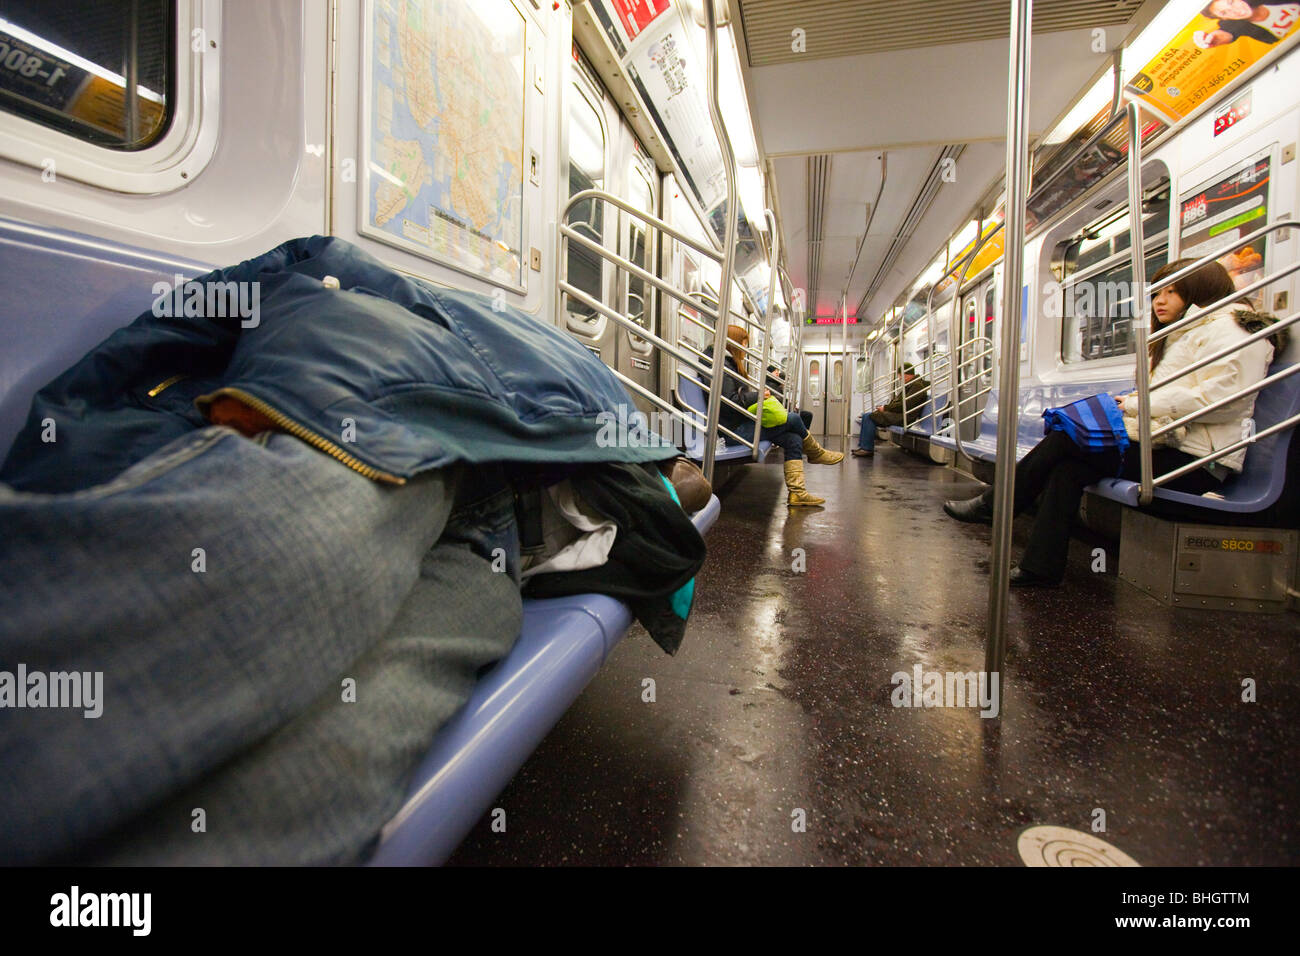 Homeless man sleeping on the subway in New York City Stock Photo